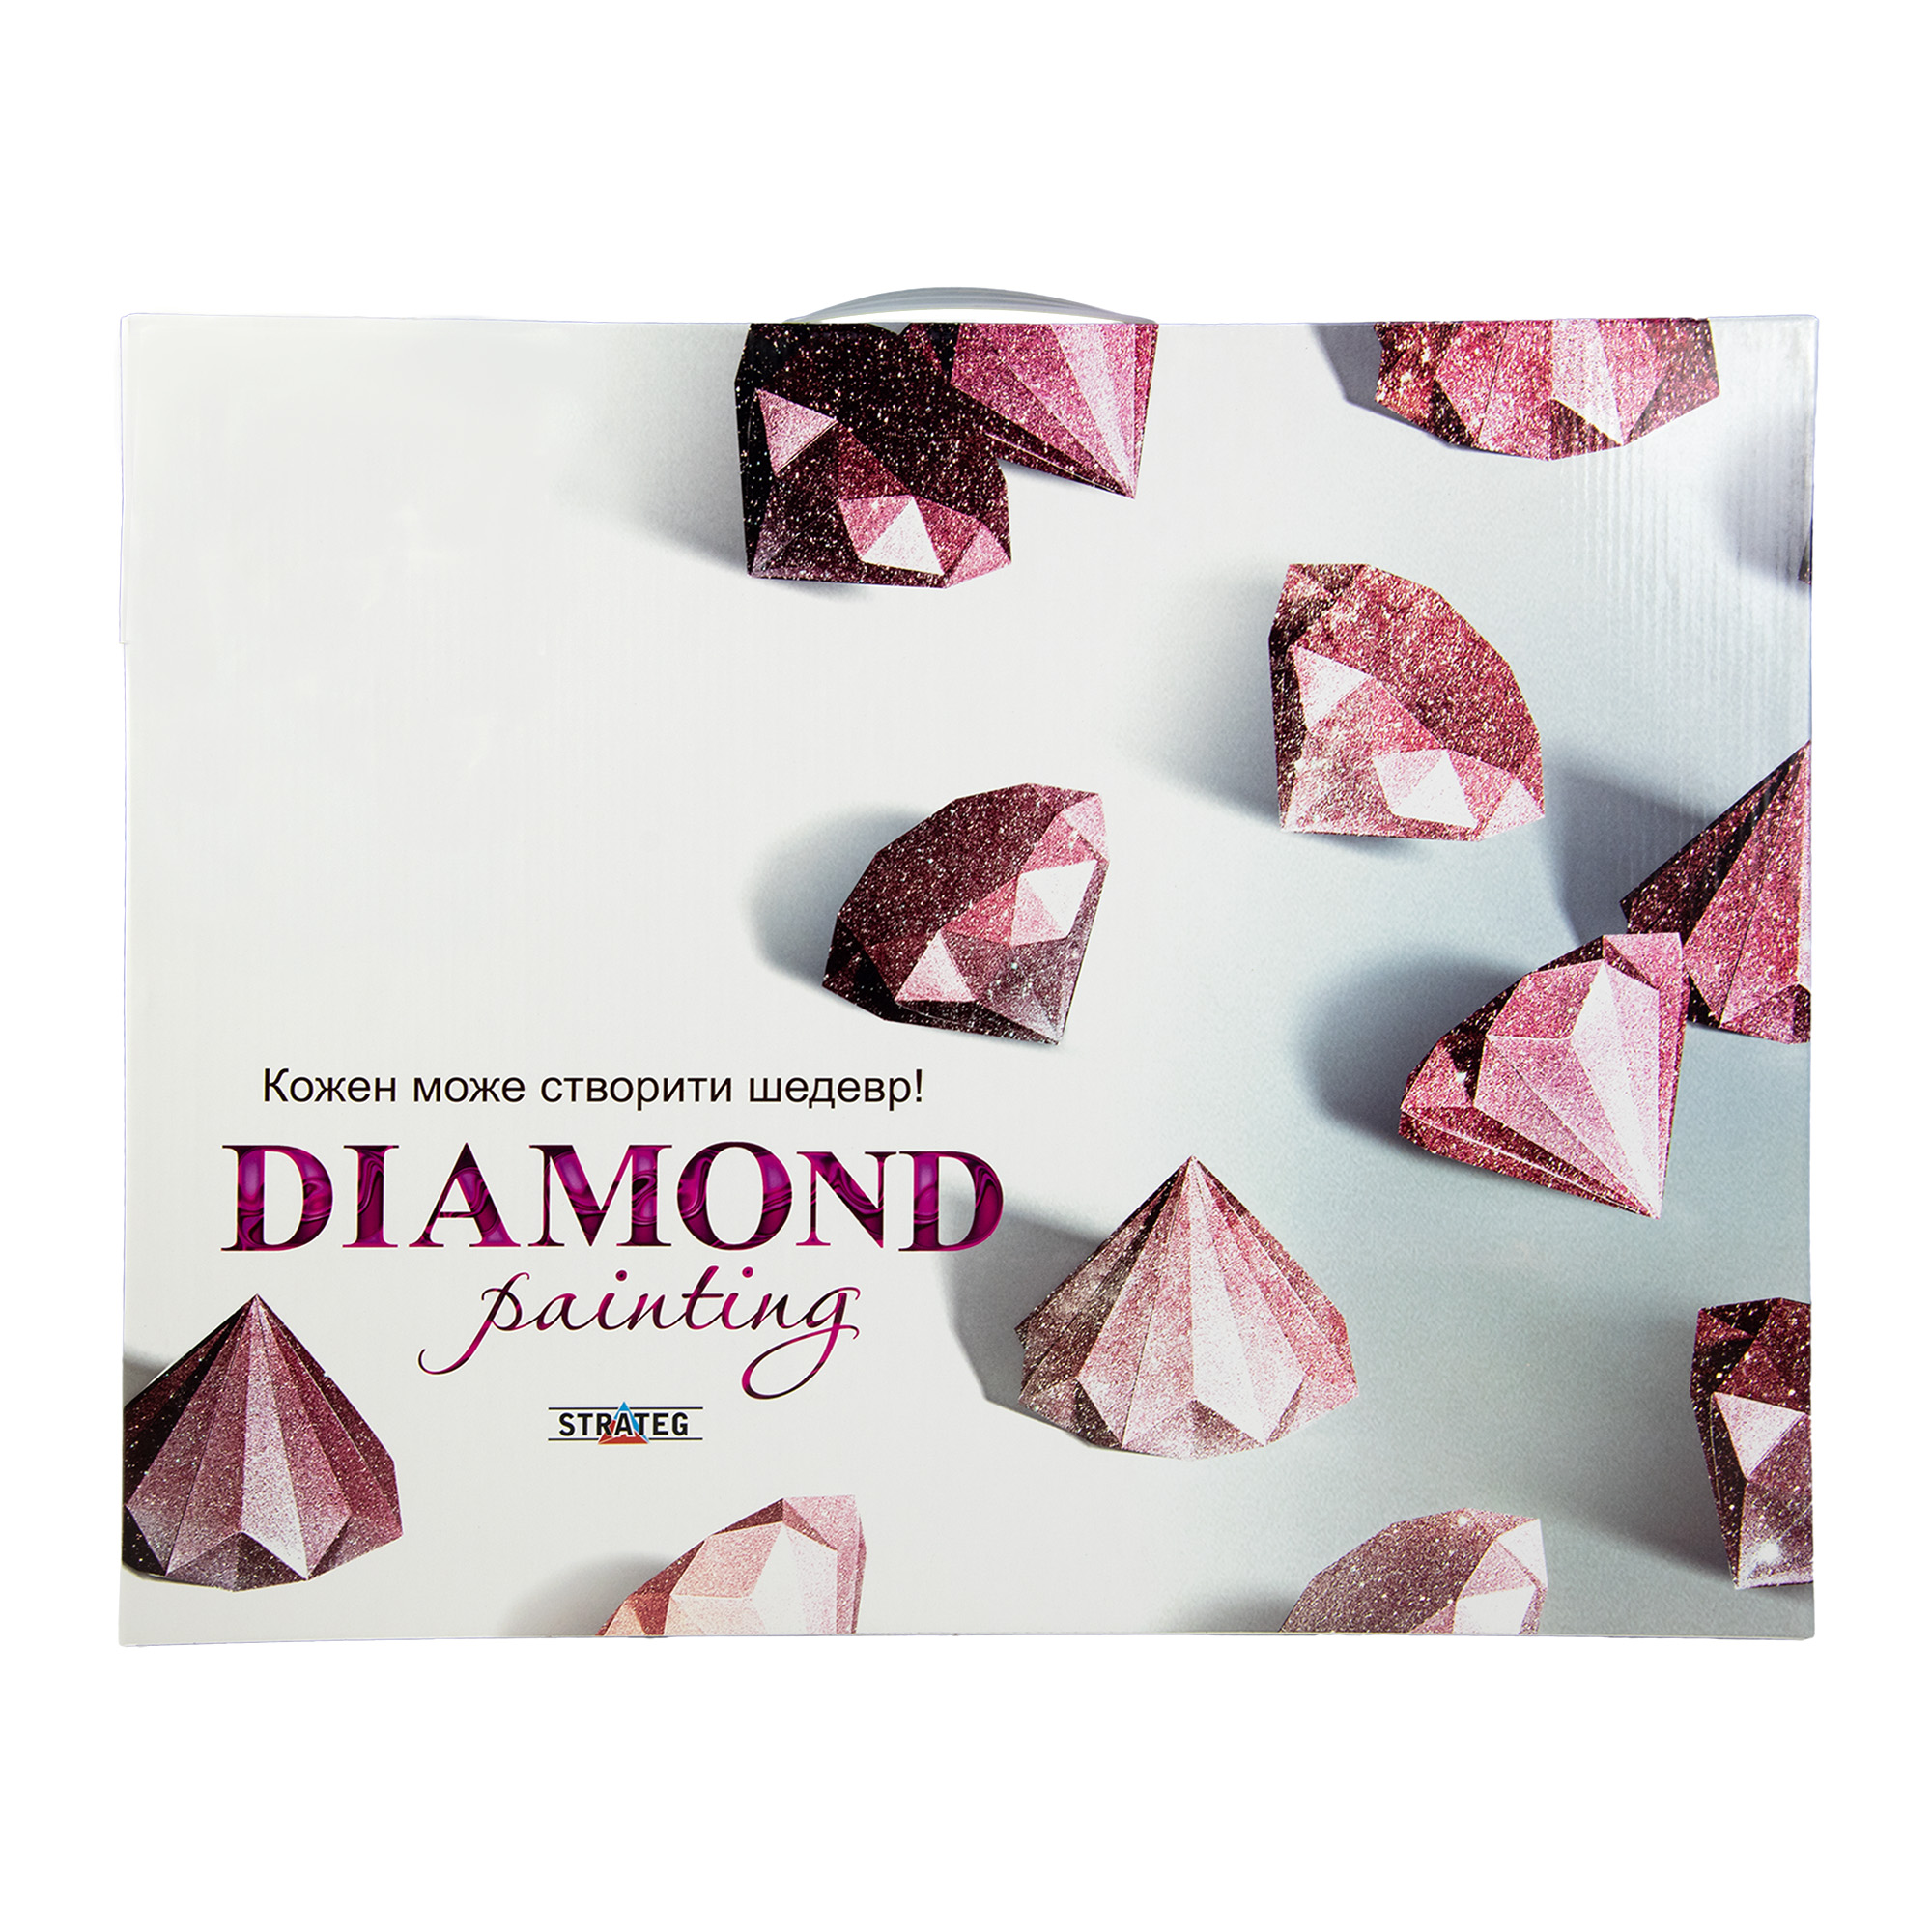 Diamantmosaik Strateg PREMIUM Helle Gewürze Größe 40x50 cm (SK85977)